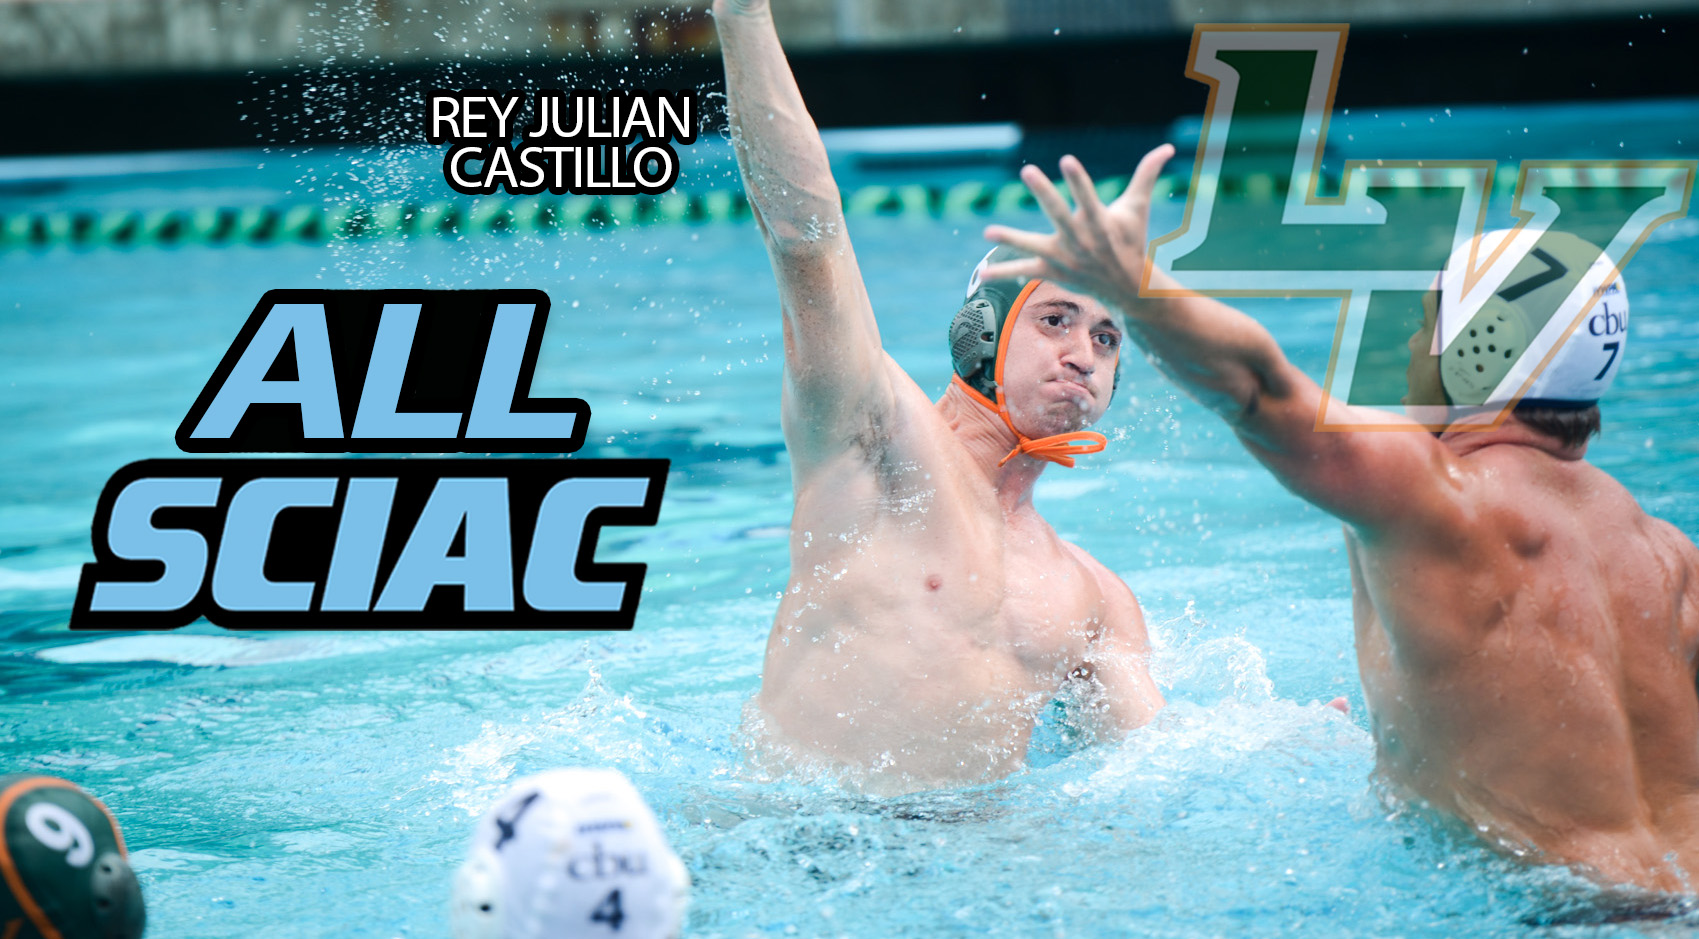 Castillo earns All-SCIAC honors